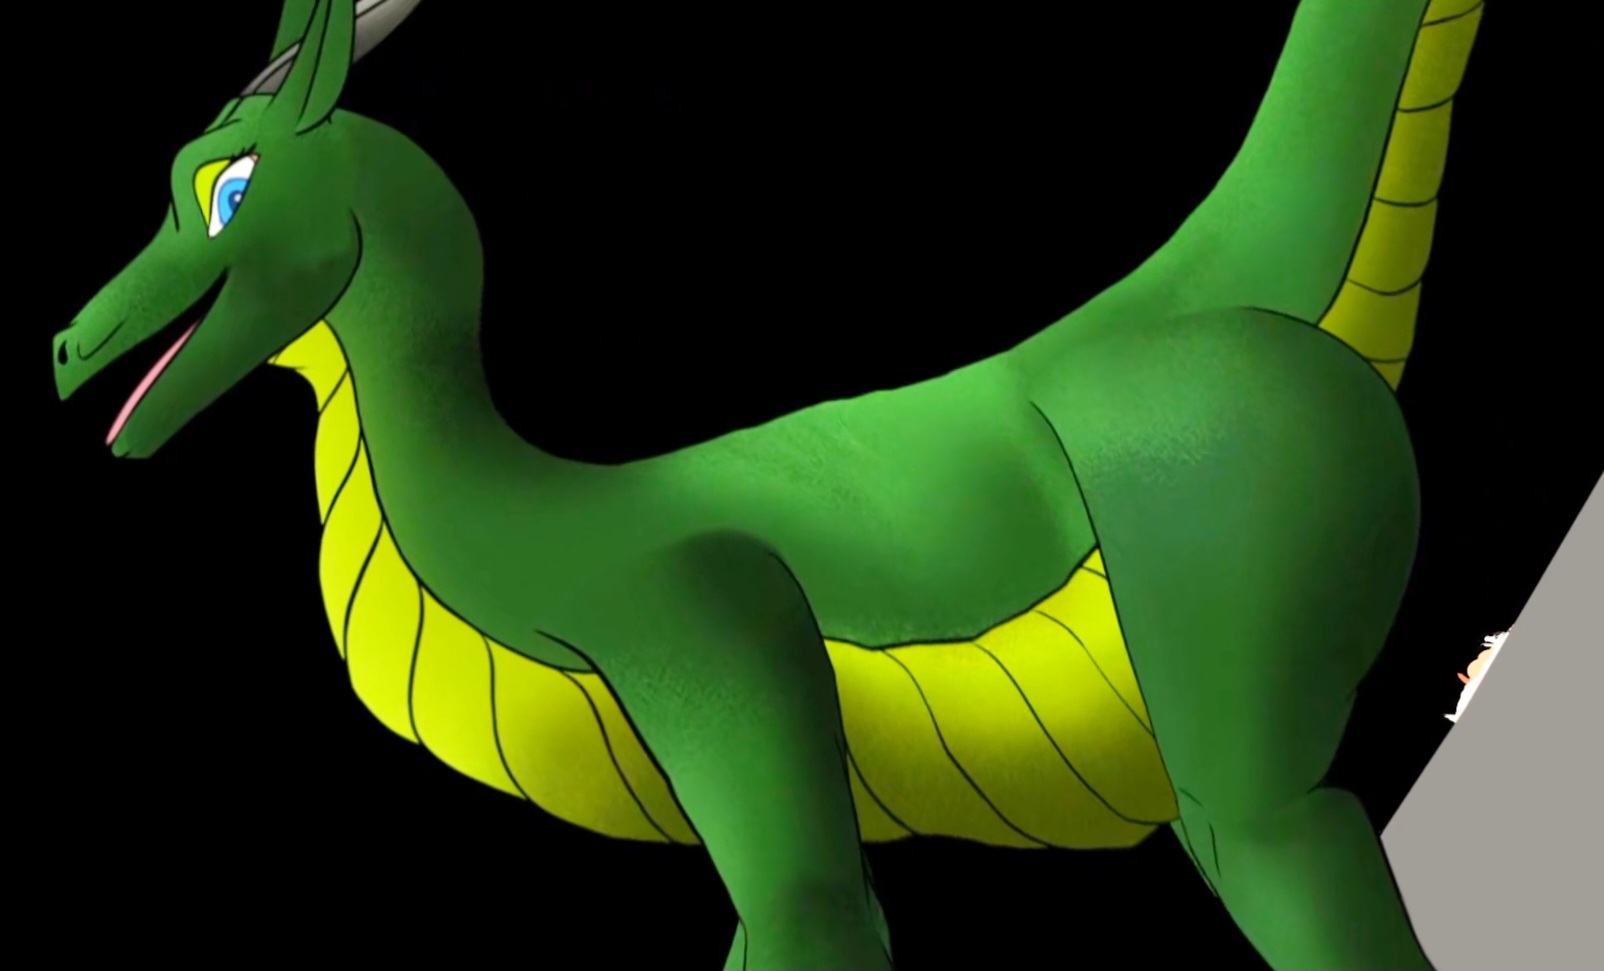 Giantess dragon buttcrush